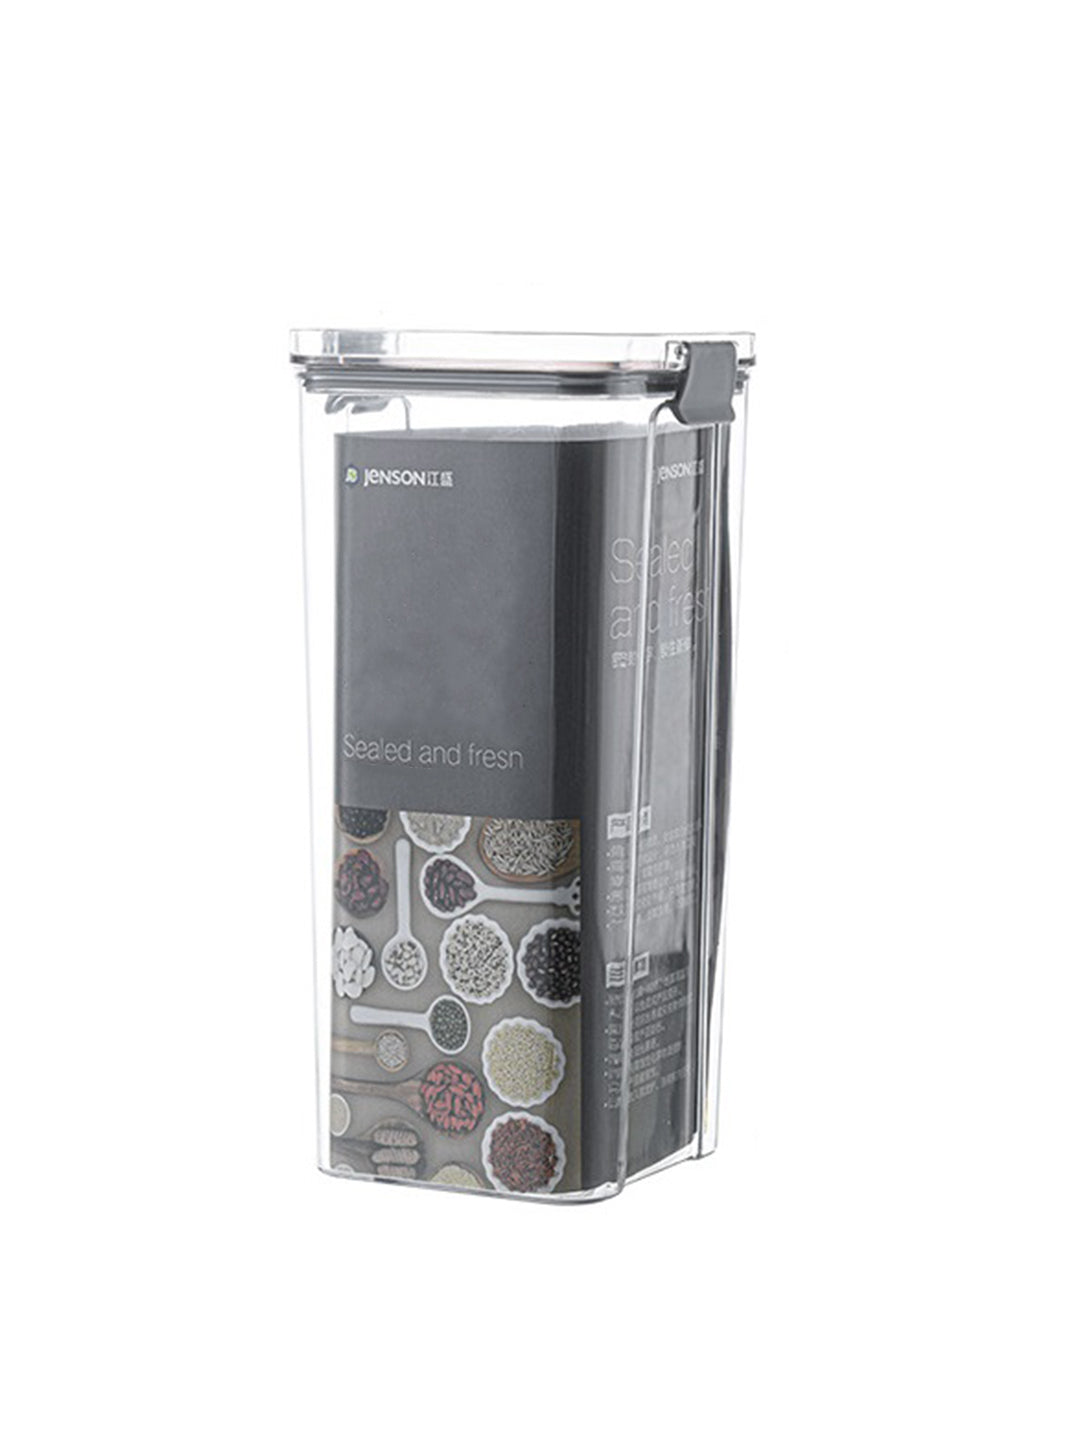 VON CASA Tall Plastic Storage Container - Transparent & Grey